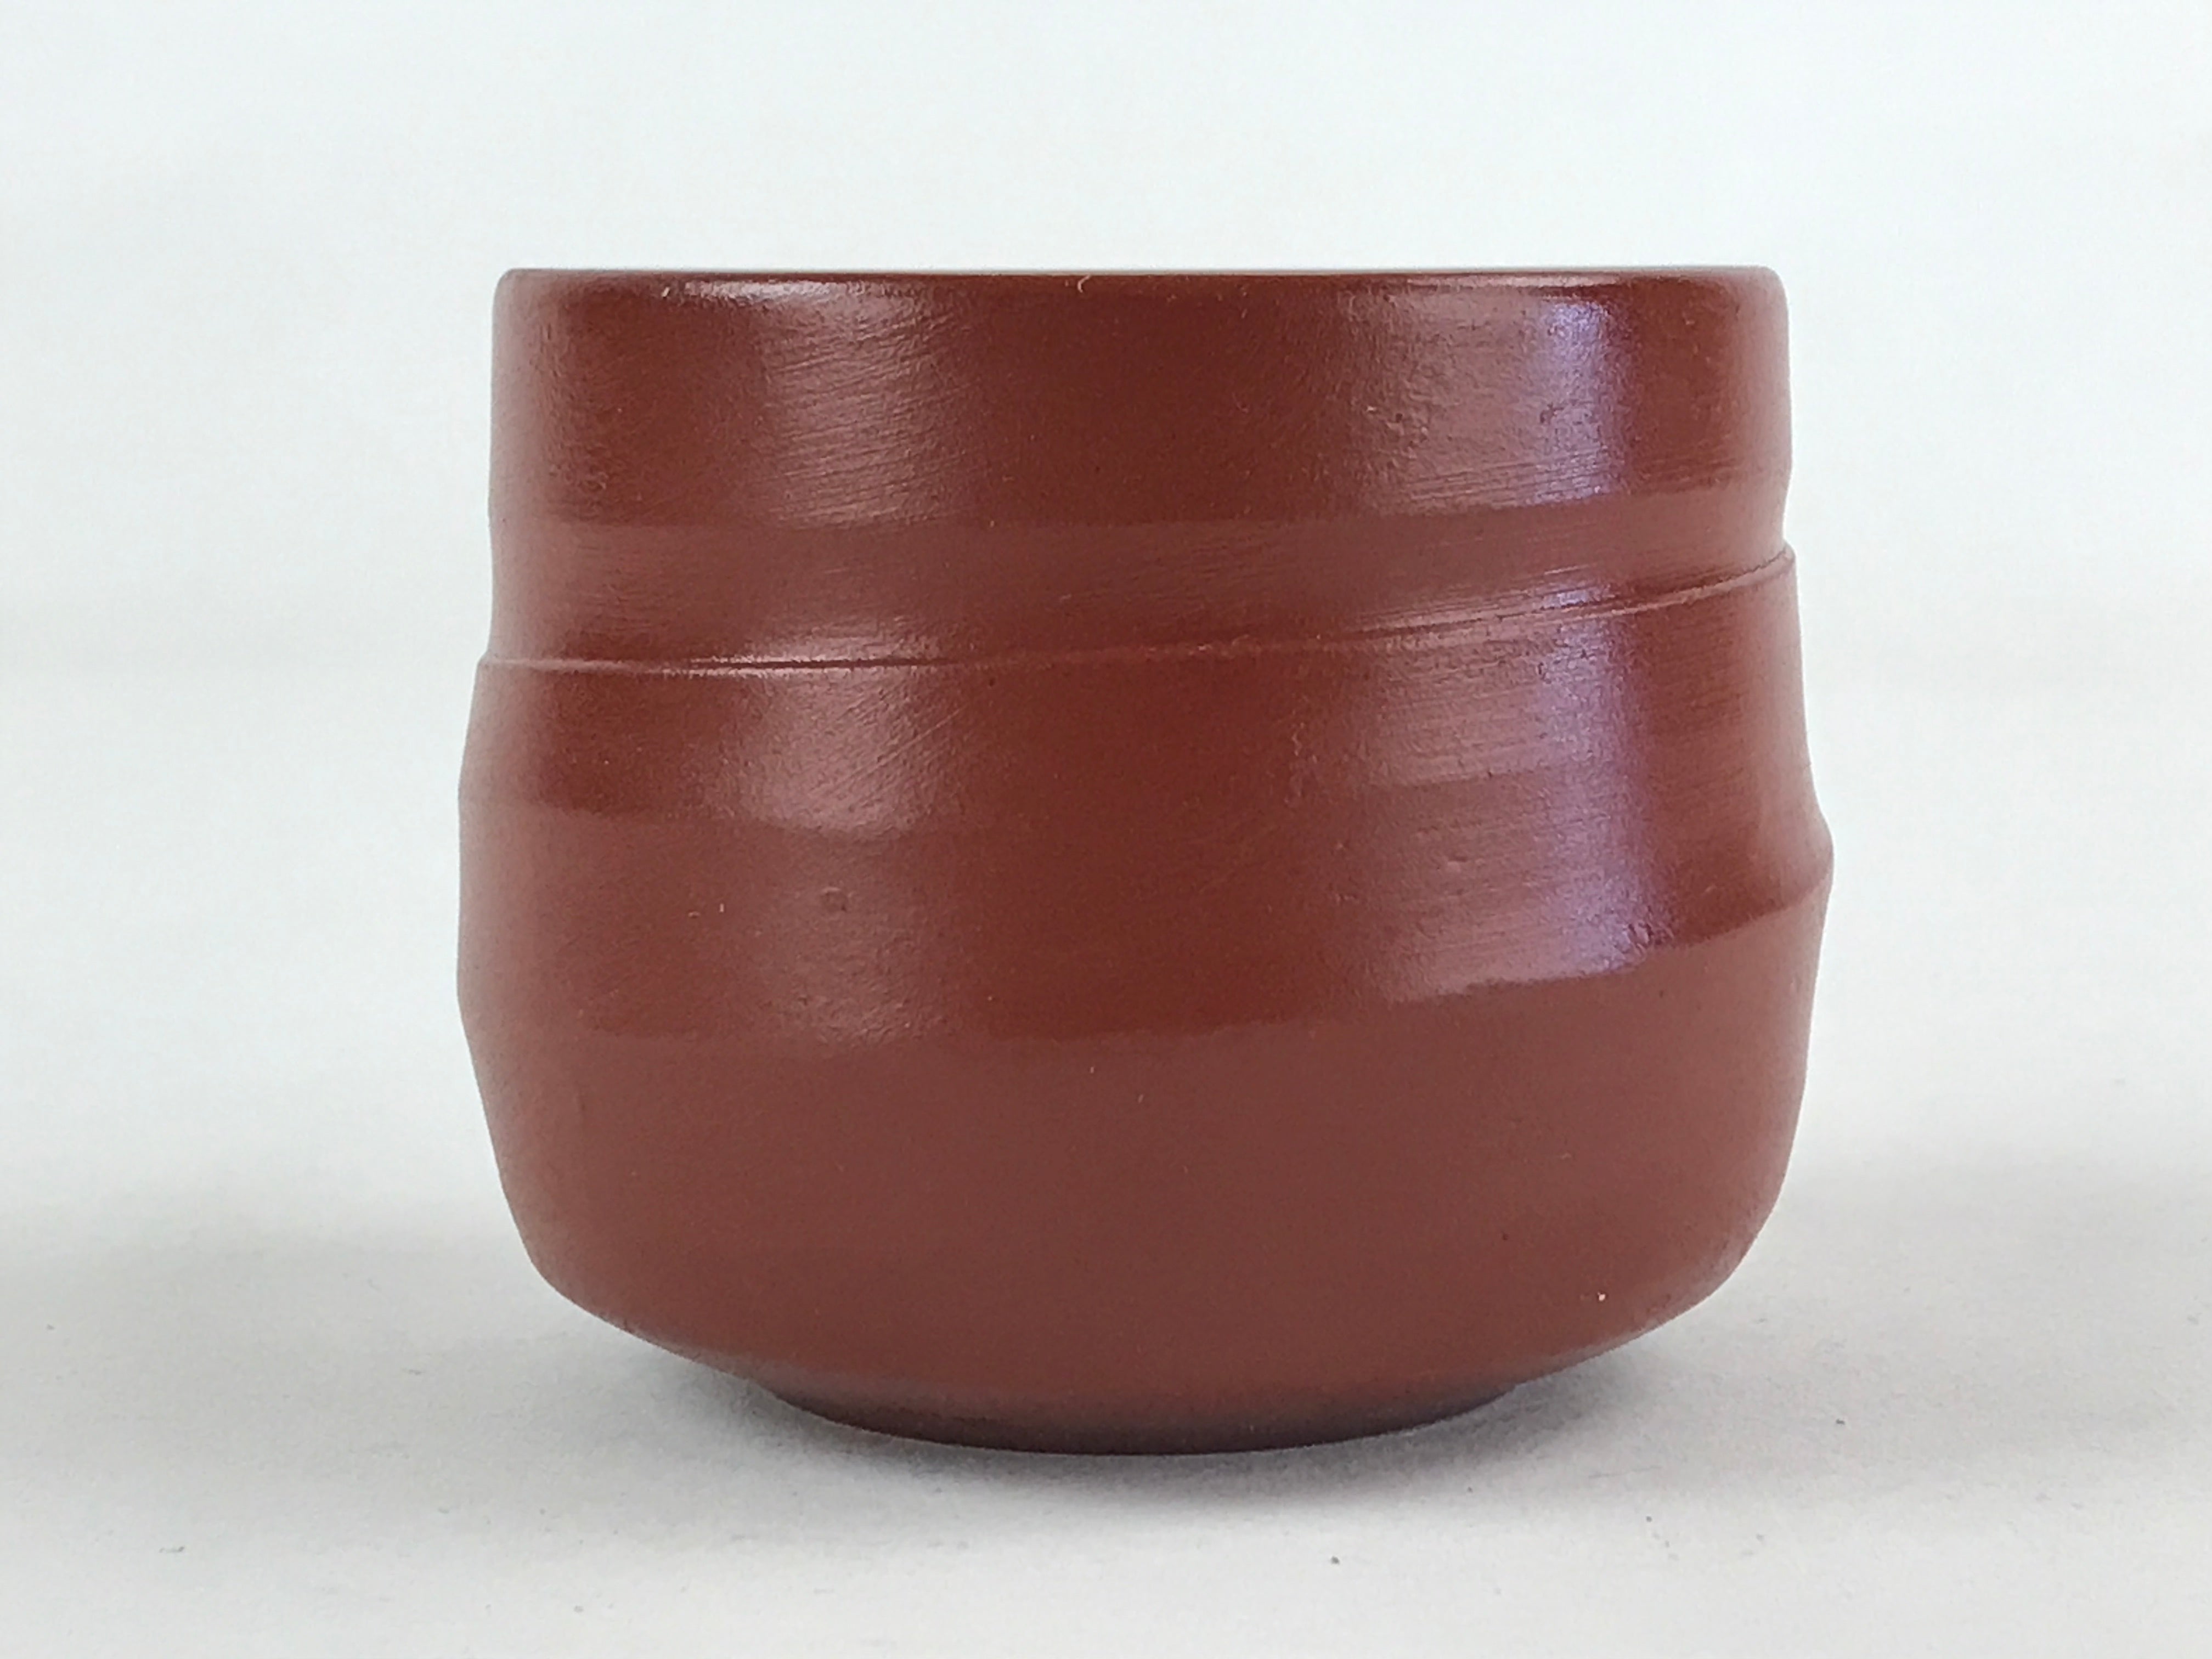 Japanese Tokoname Ware Ceramic Teacup Vtg Pottery Yunomi Brown Lines TC379